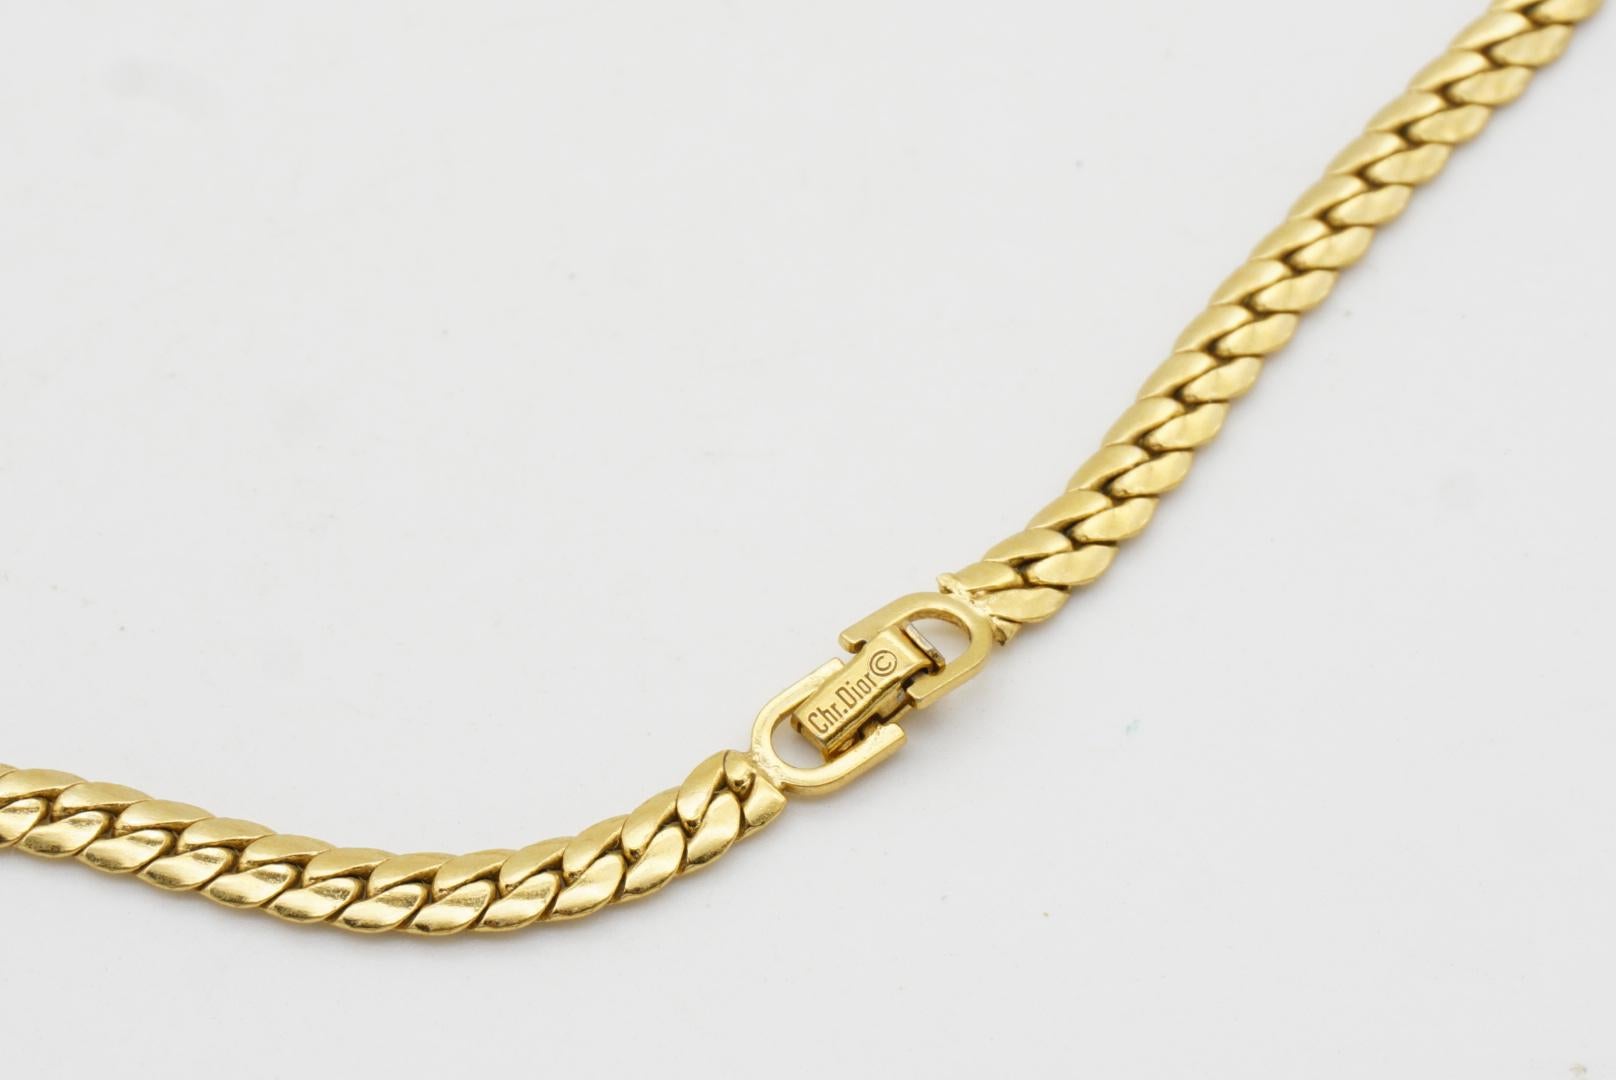 Christian Dior Vintage 1970s Moon Sparkling Crystals Crescent Pendant Necklace For Sale 6